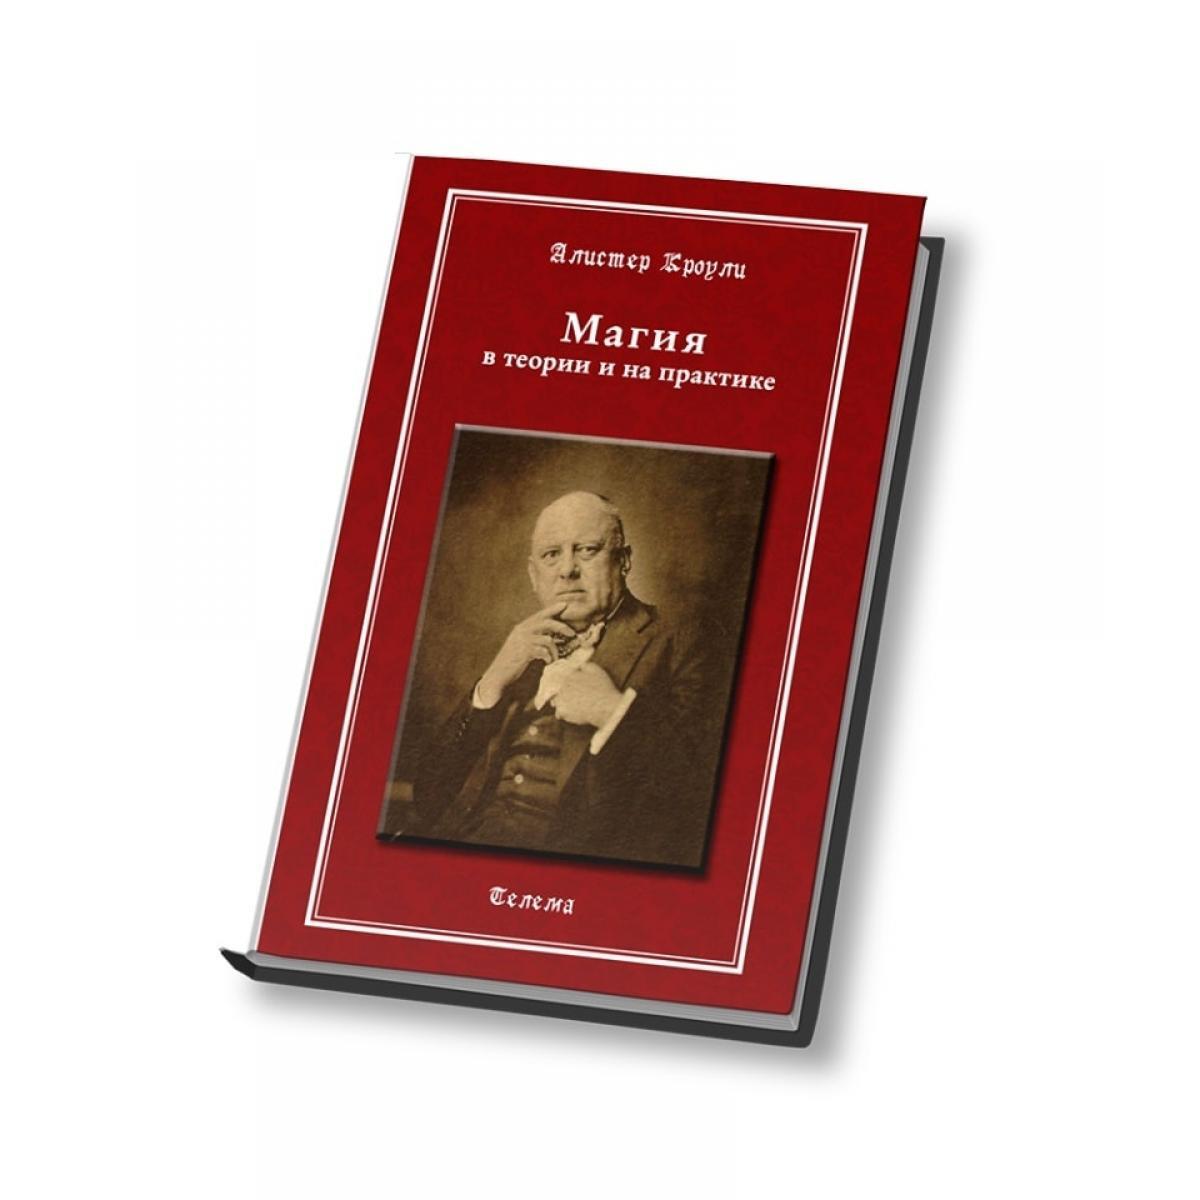 

Алистер Кроули "Магия в теории и на практике", 2-е издание